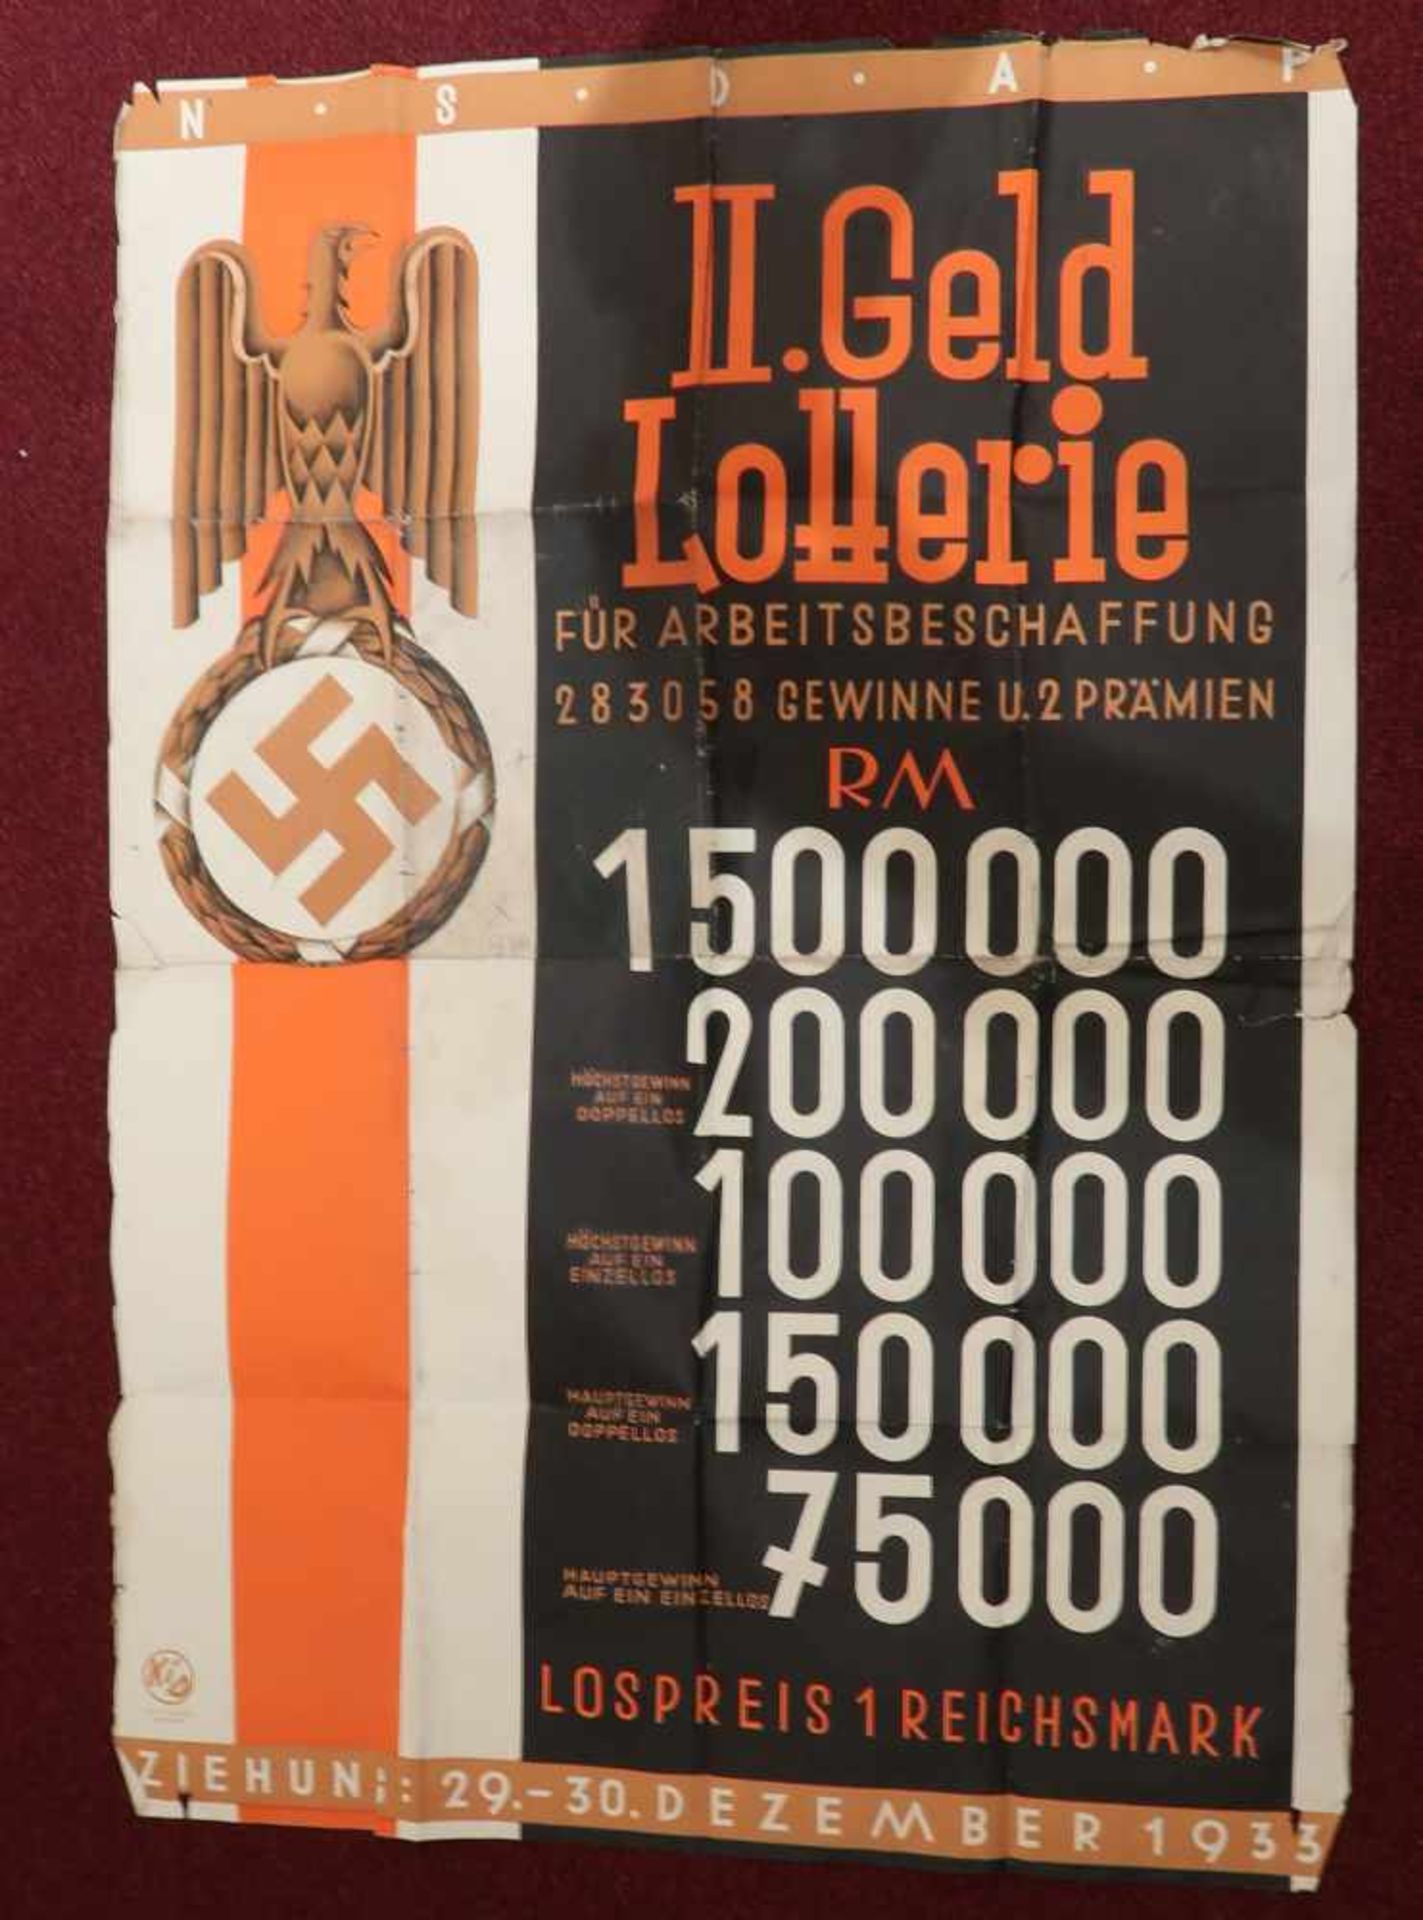 NSDAP-Plakat: 2. Geld-Lotterie, Ziehung 29-30. Dezember 1933, Original-Plakat. Altersspuren, 116 x